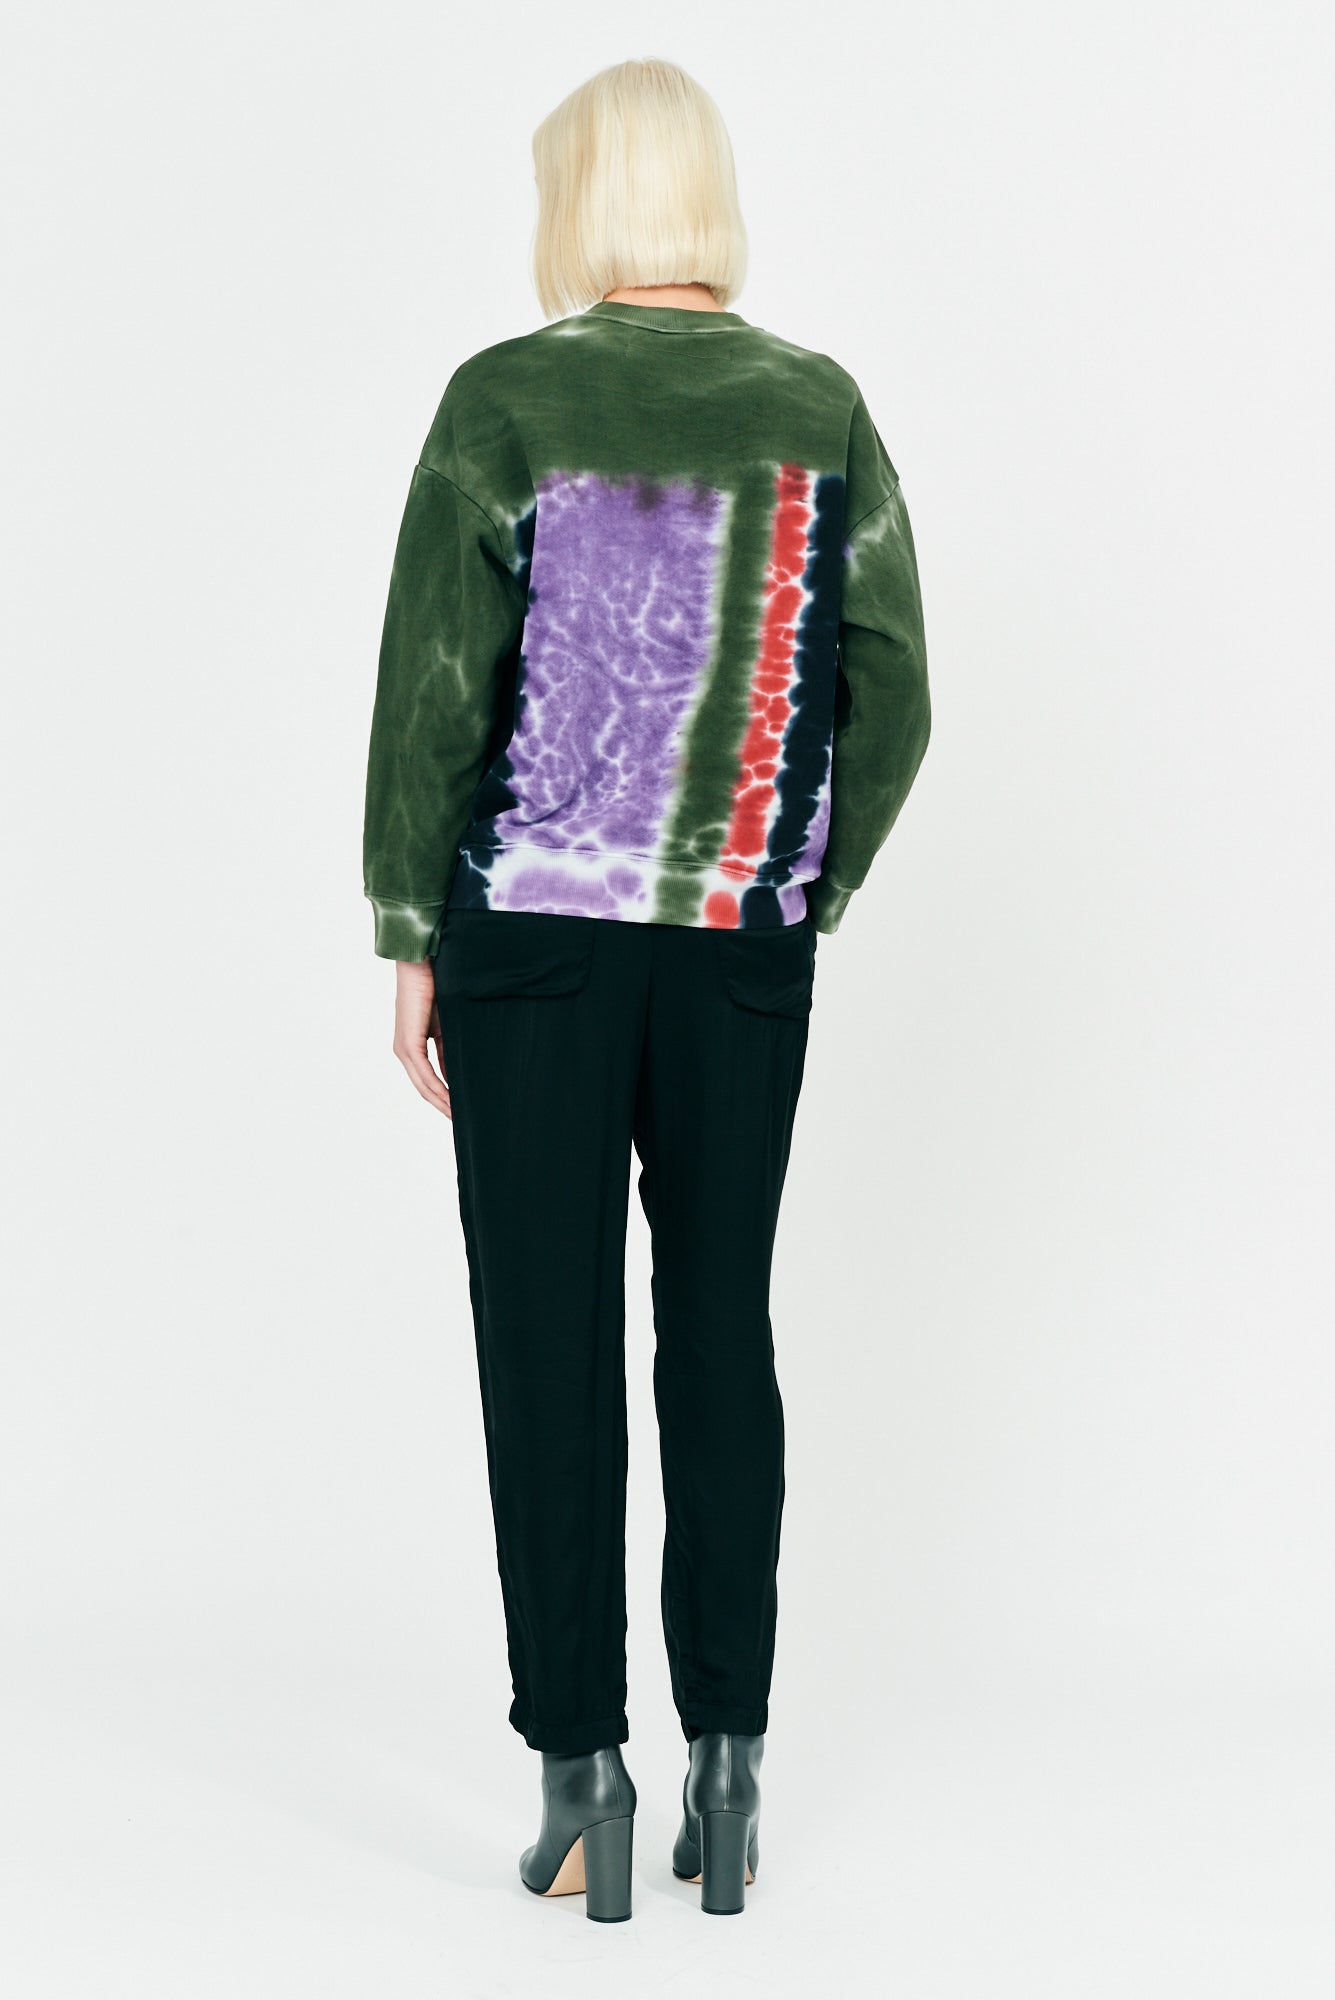 Modernist Tie Dye Painted Baby Rib and Fleece Drop Shoulder Sweatshirt Full Back View